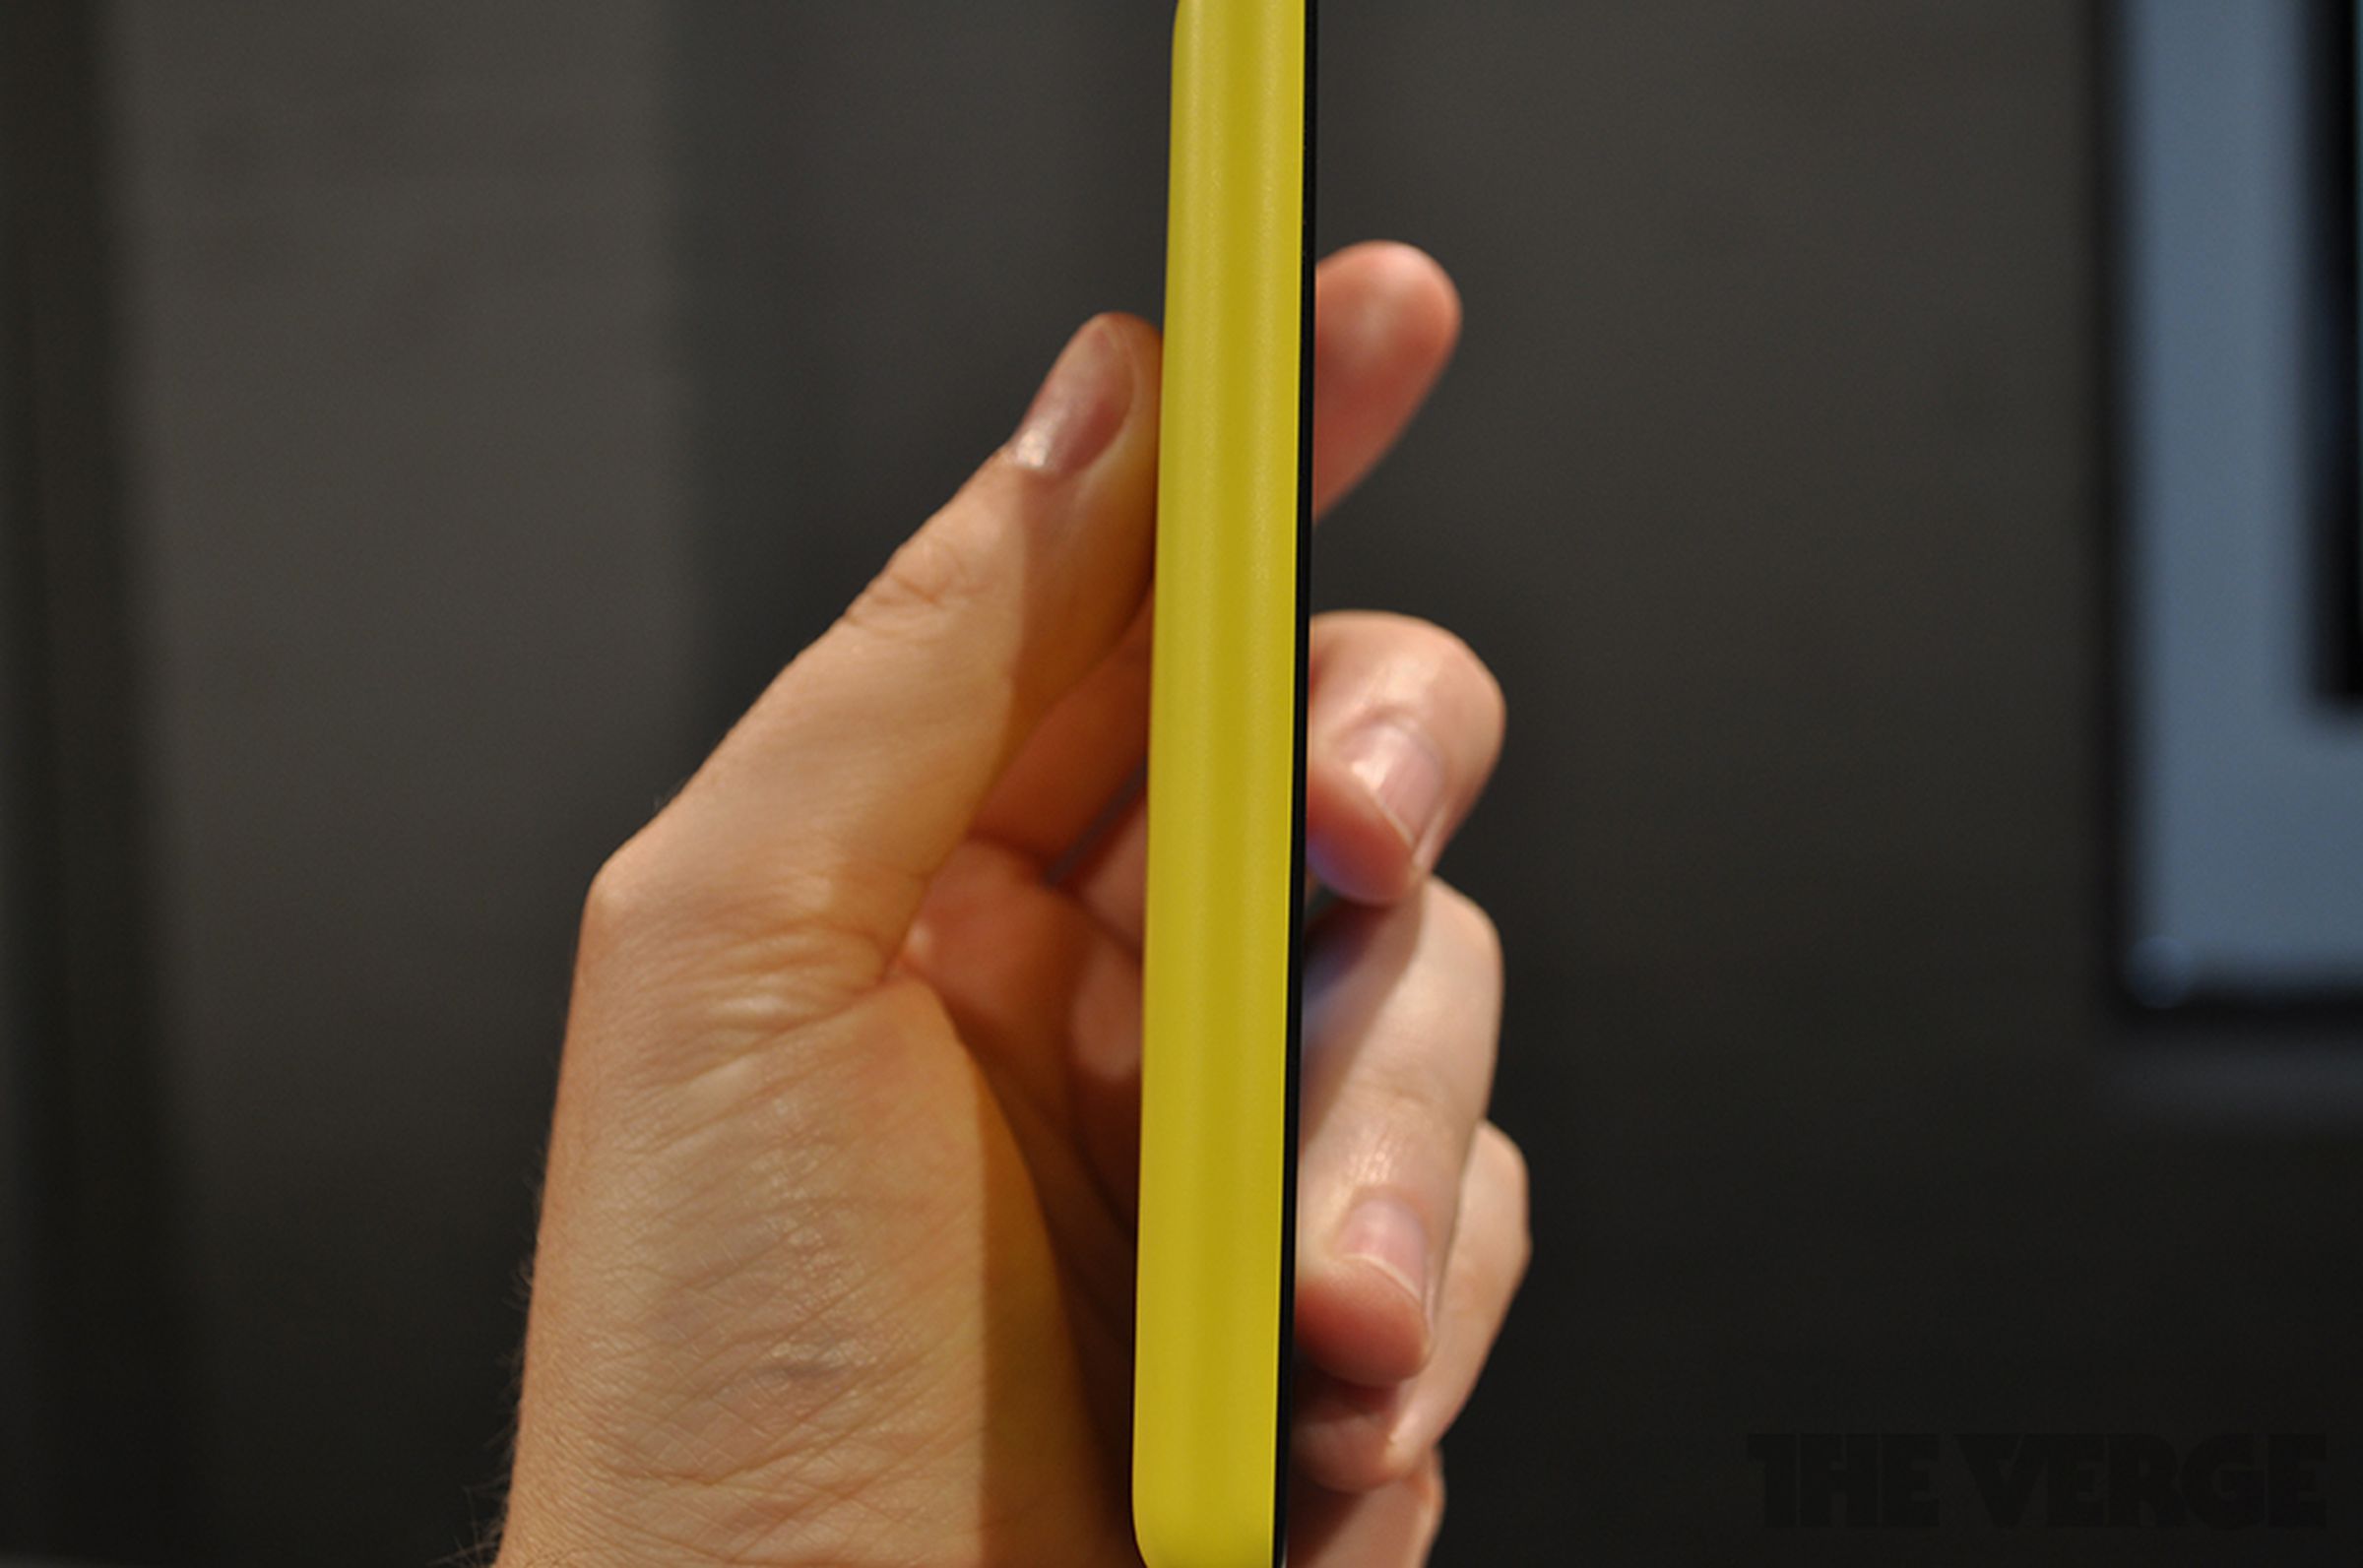 Nokia Lumia 820 hands-on photos